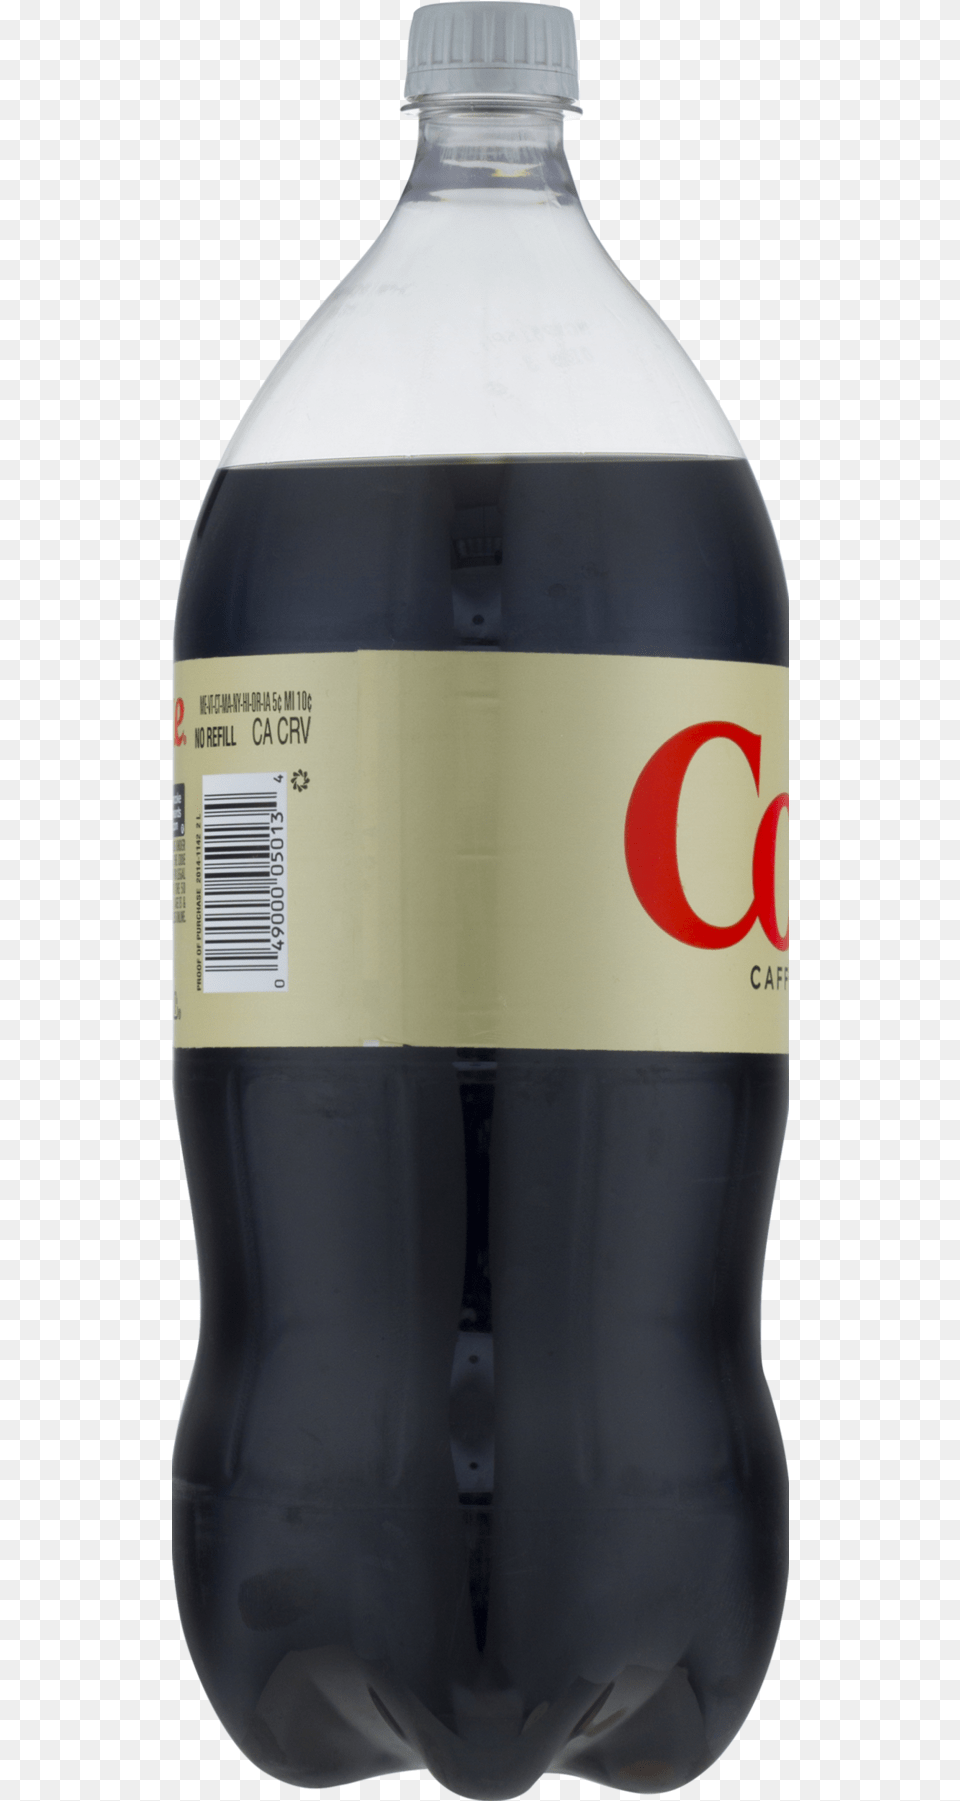 Caffeine Soda L Two Liter Bottle, Beverage, Coke, Shaker Free Png Download